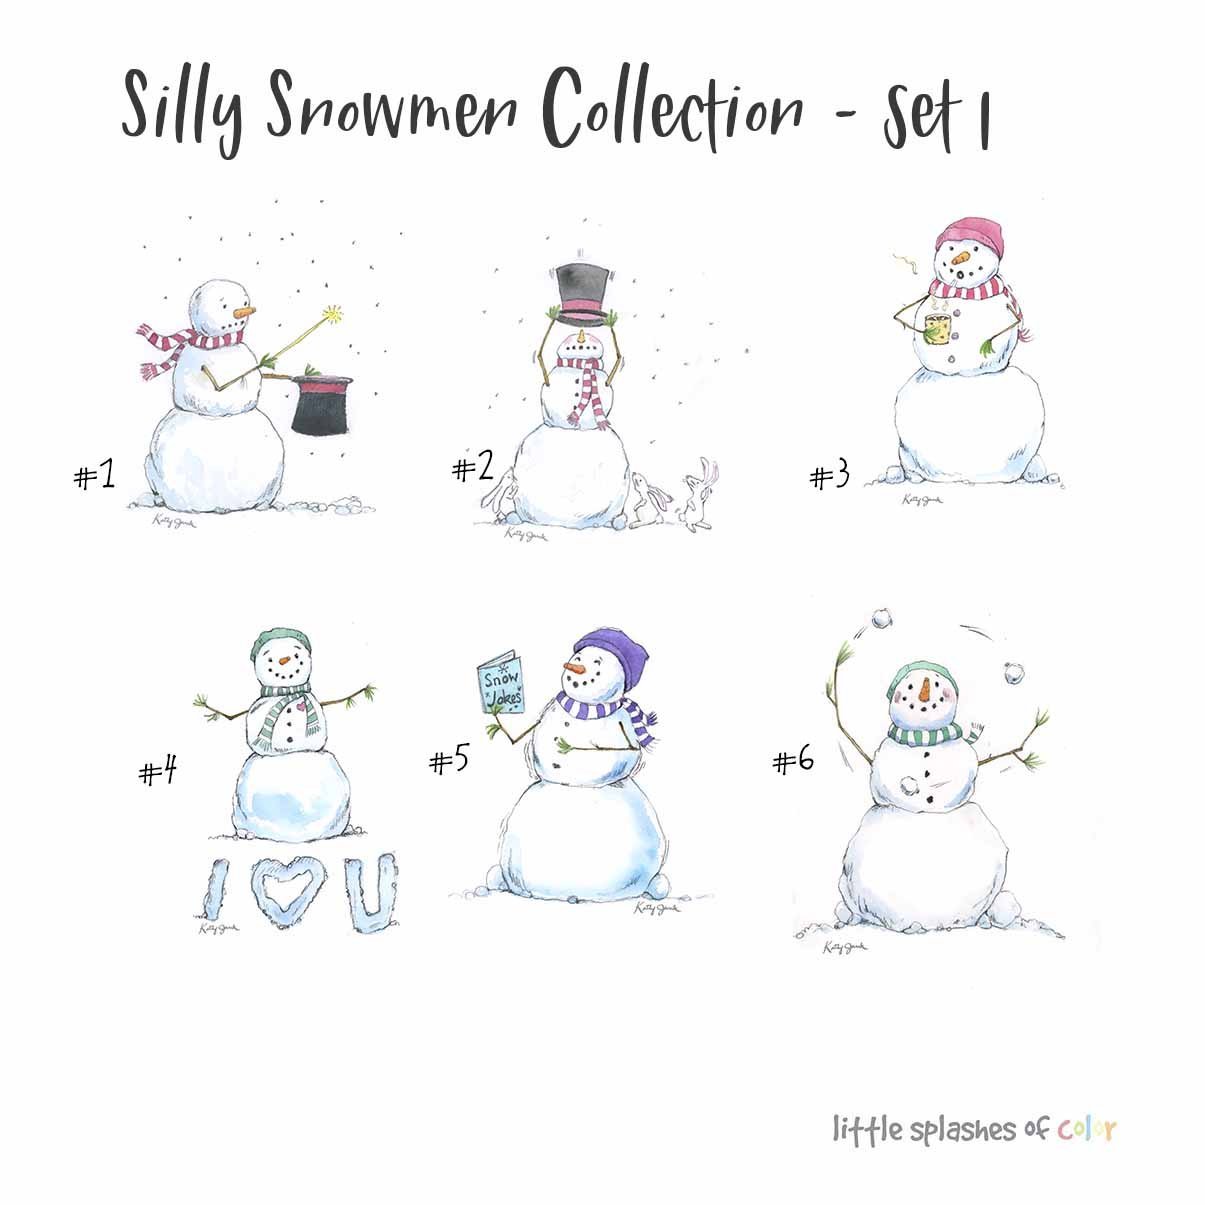 snowman cards